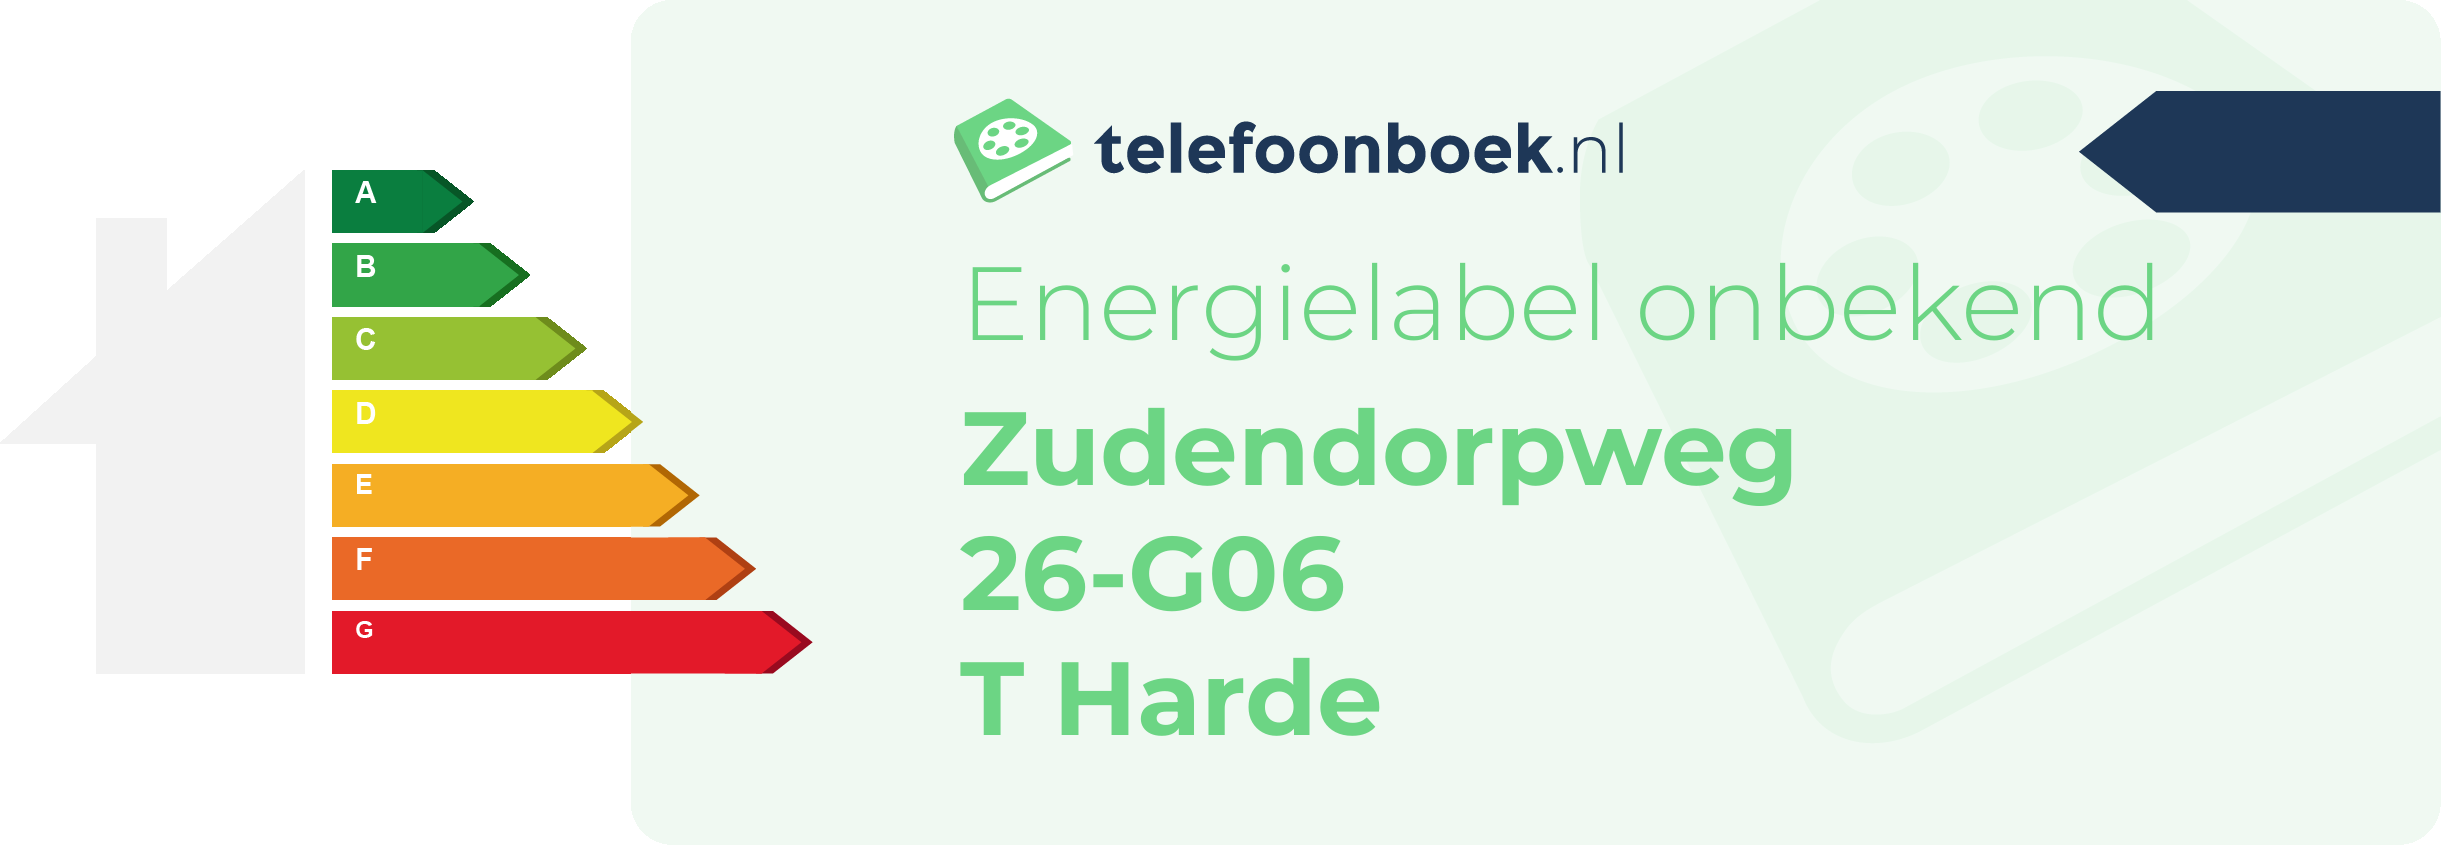 Energielabel Zudendorpweg 26-G06 T Harde